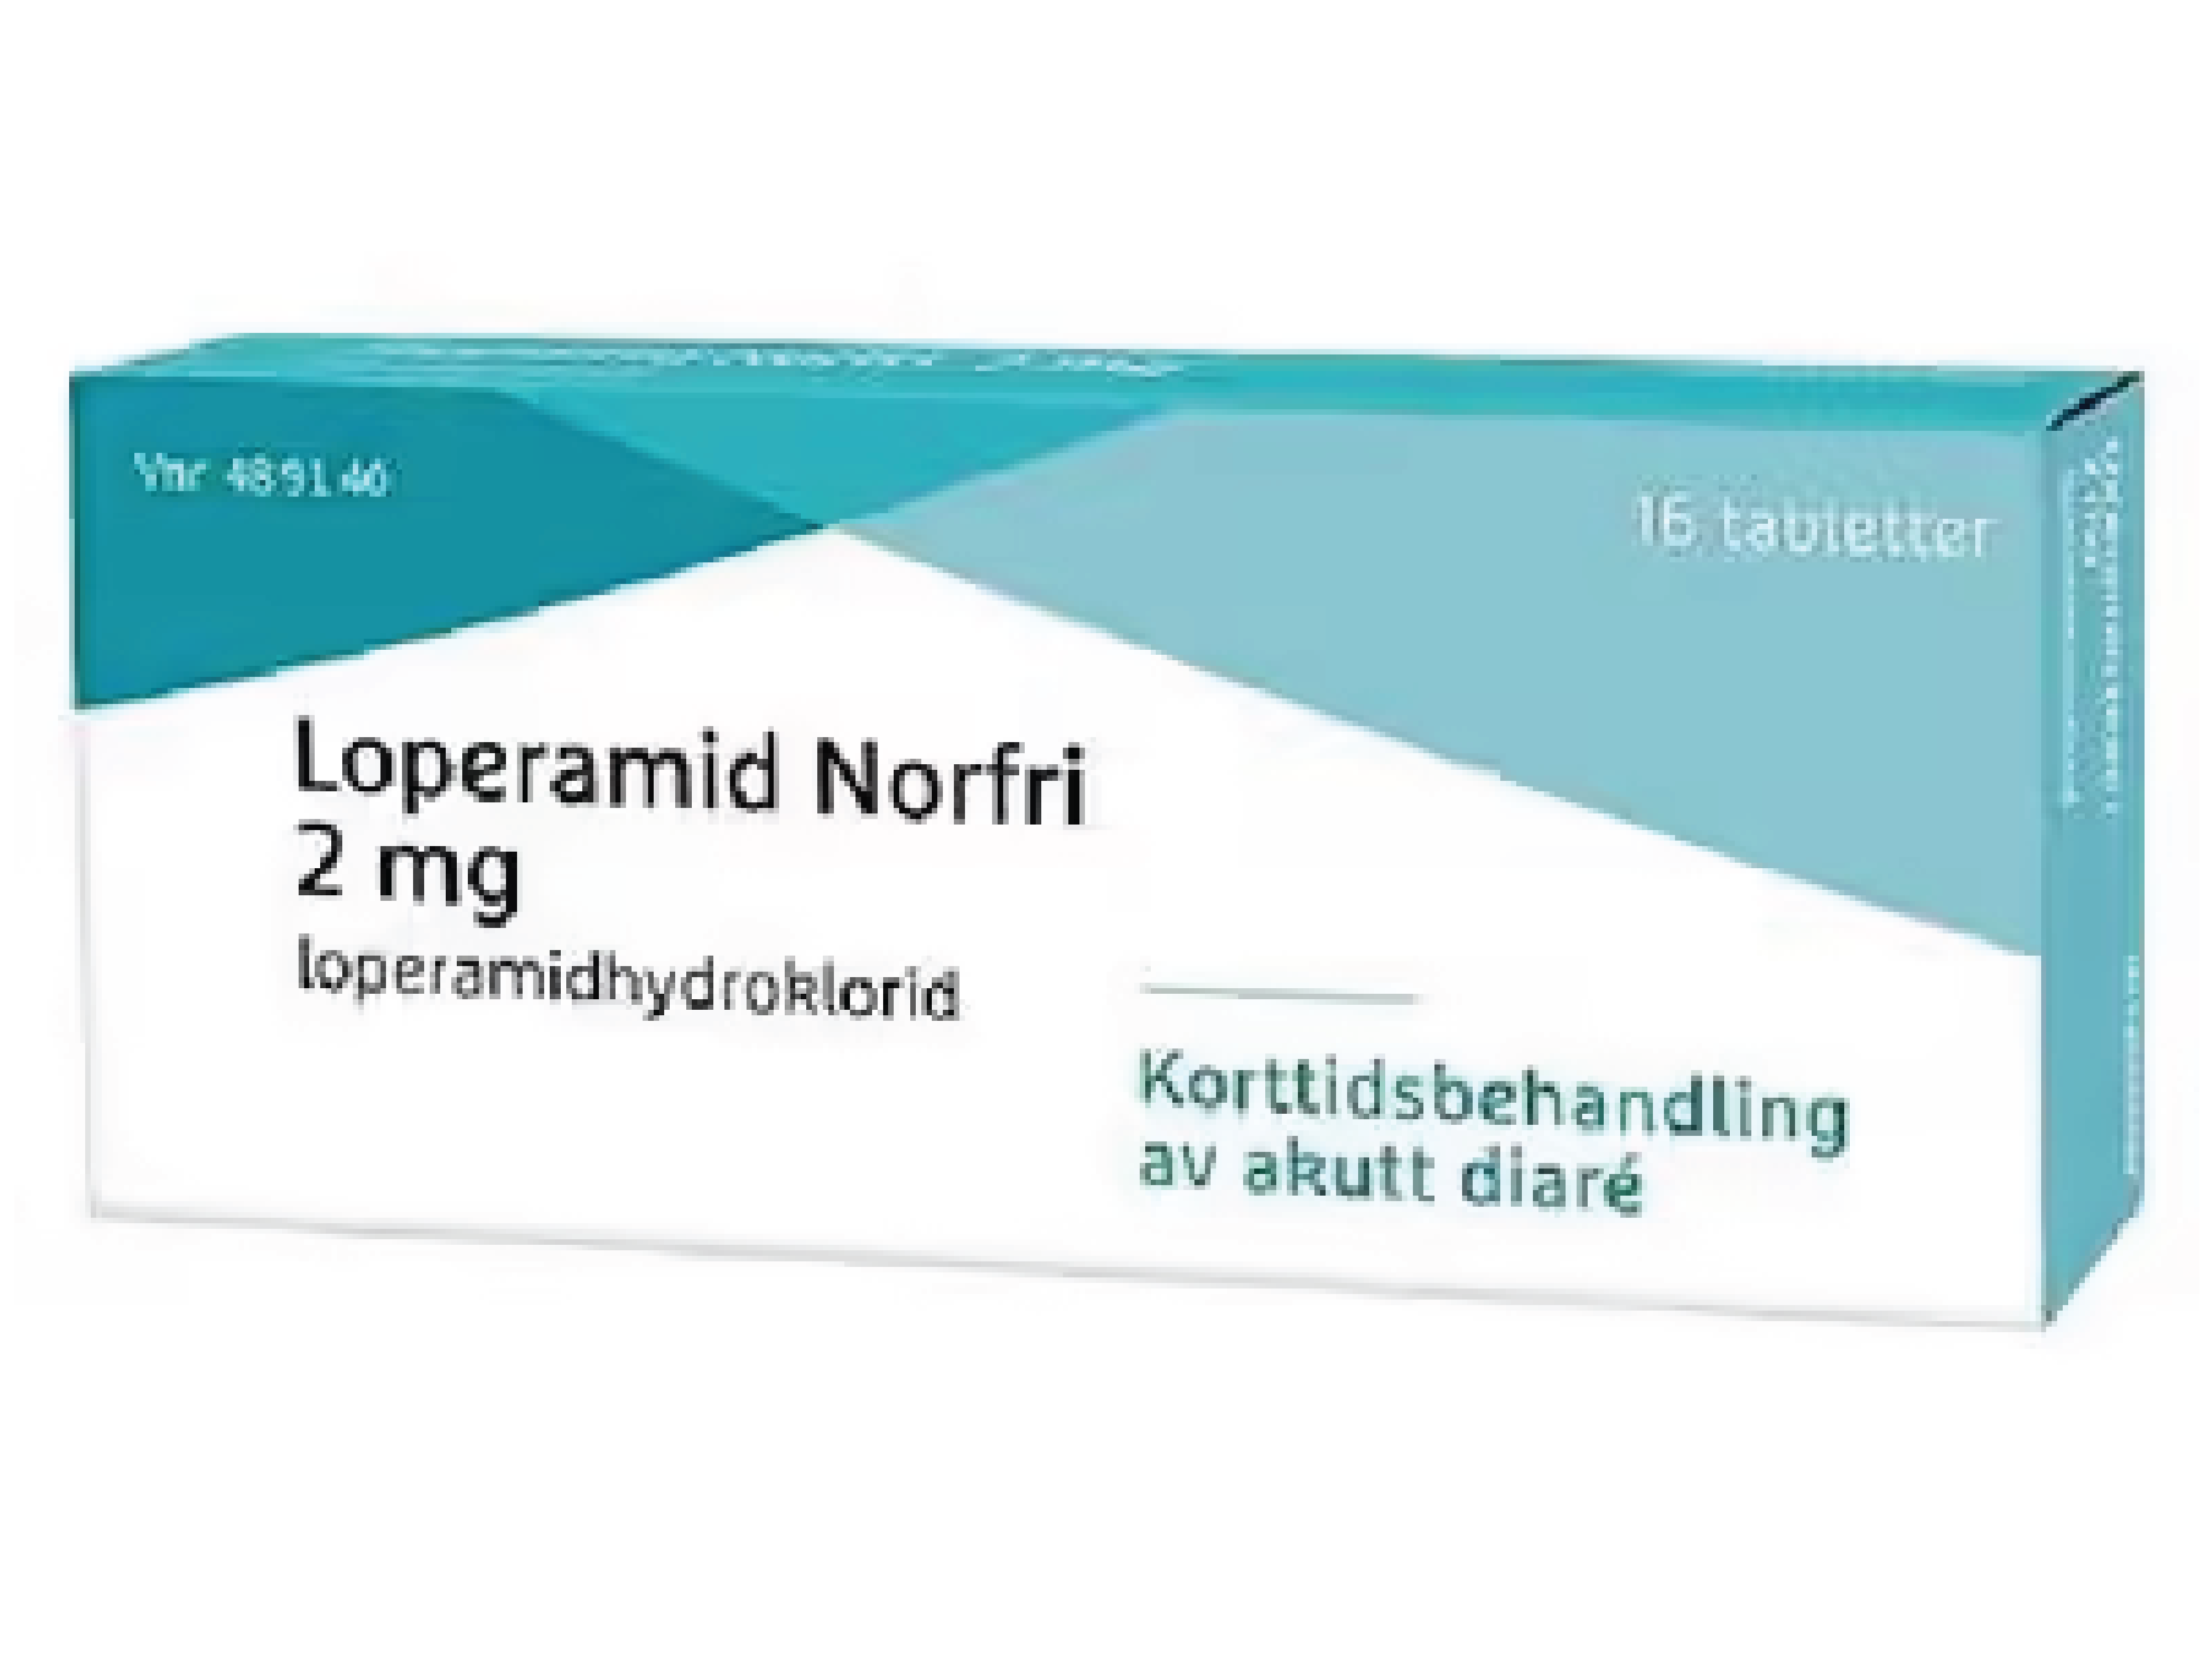 Loperamid Norfri 2 mg tabletter, 16 stk.